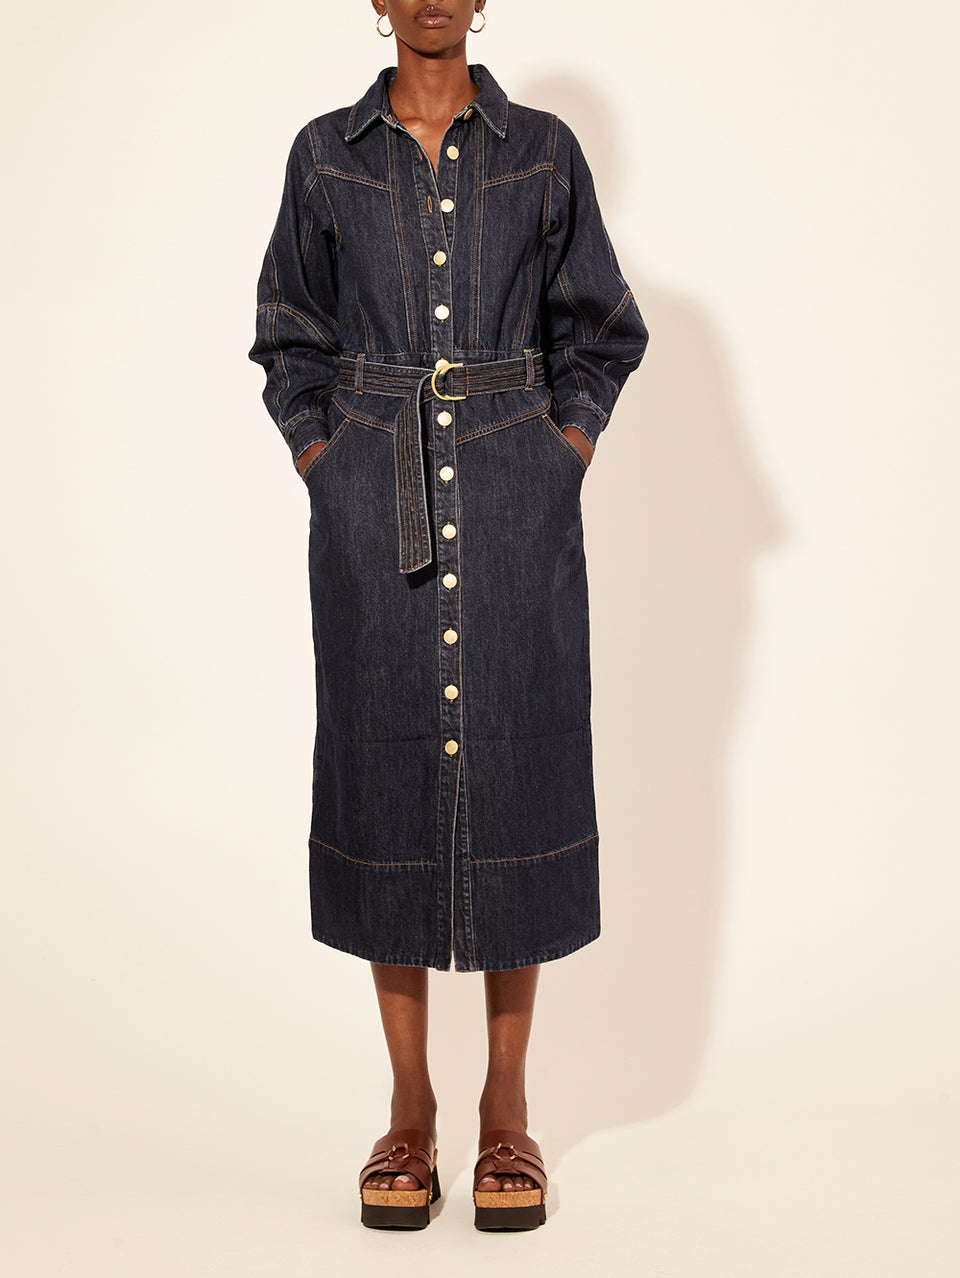 Bonny Midi Dress KIVARI | Model wears navy denim midi dress